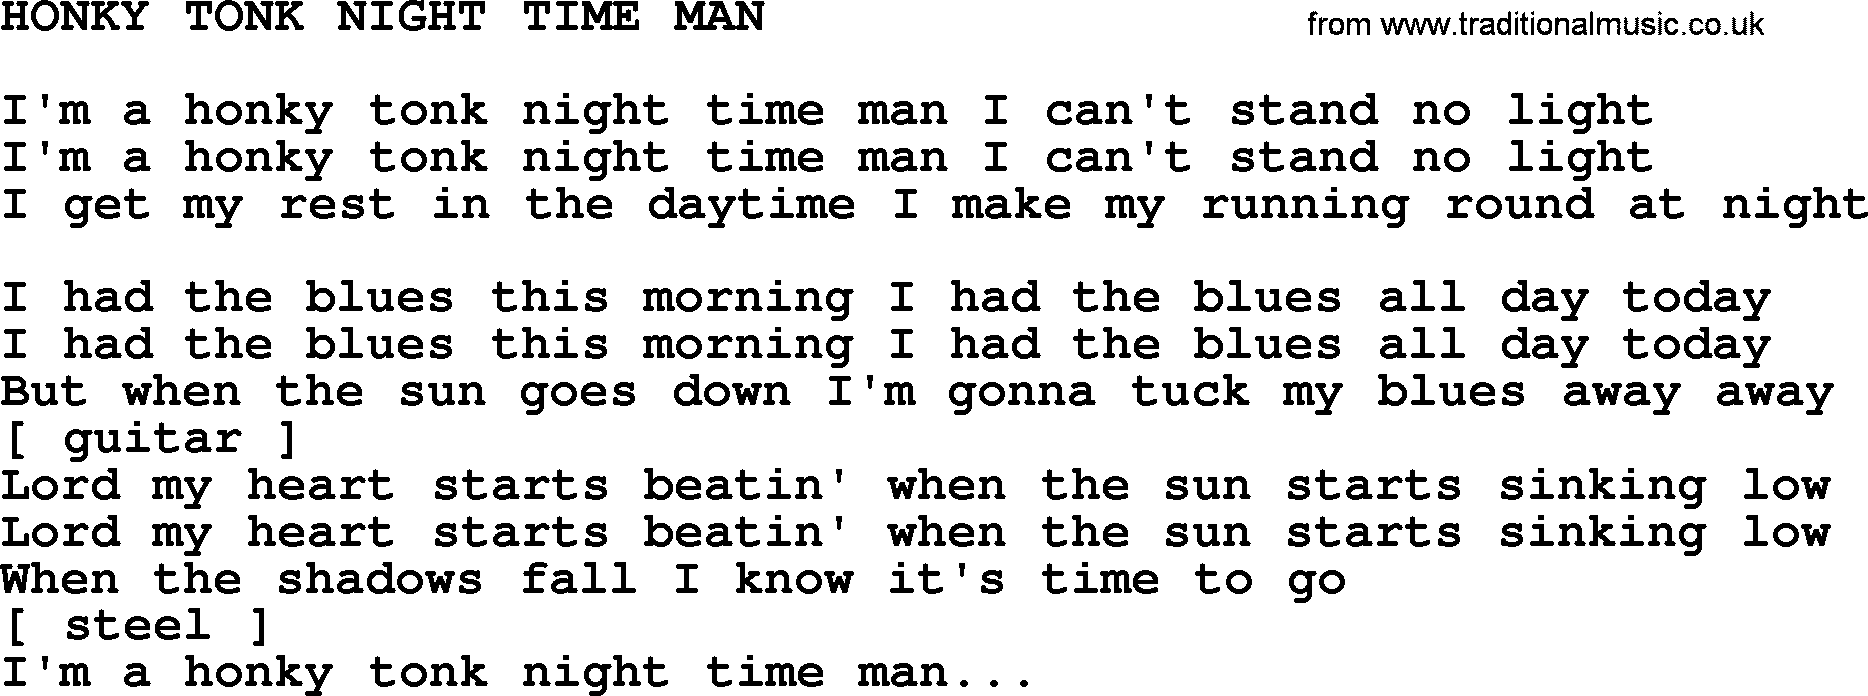 Merle Haggard song: Honky Tonk Night Time Man, lyrics.